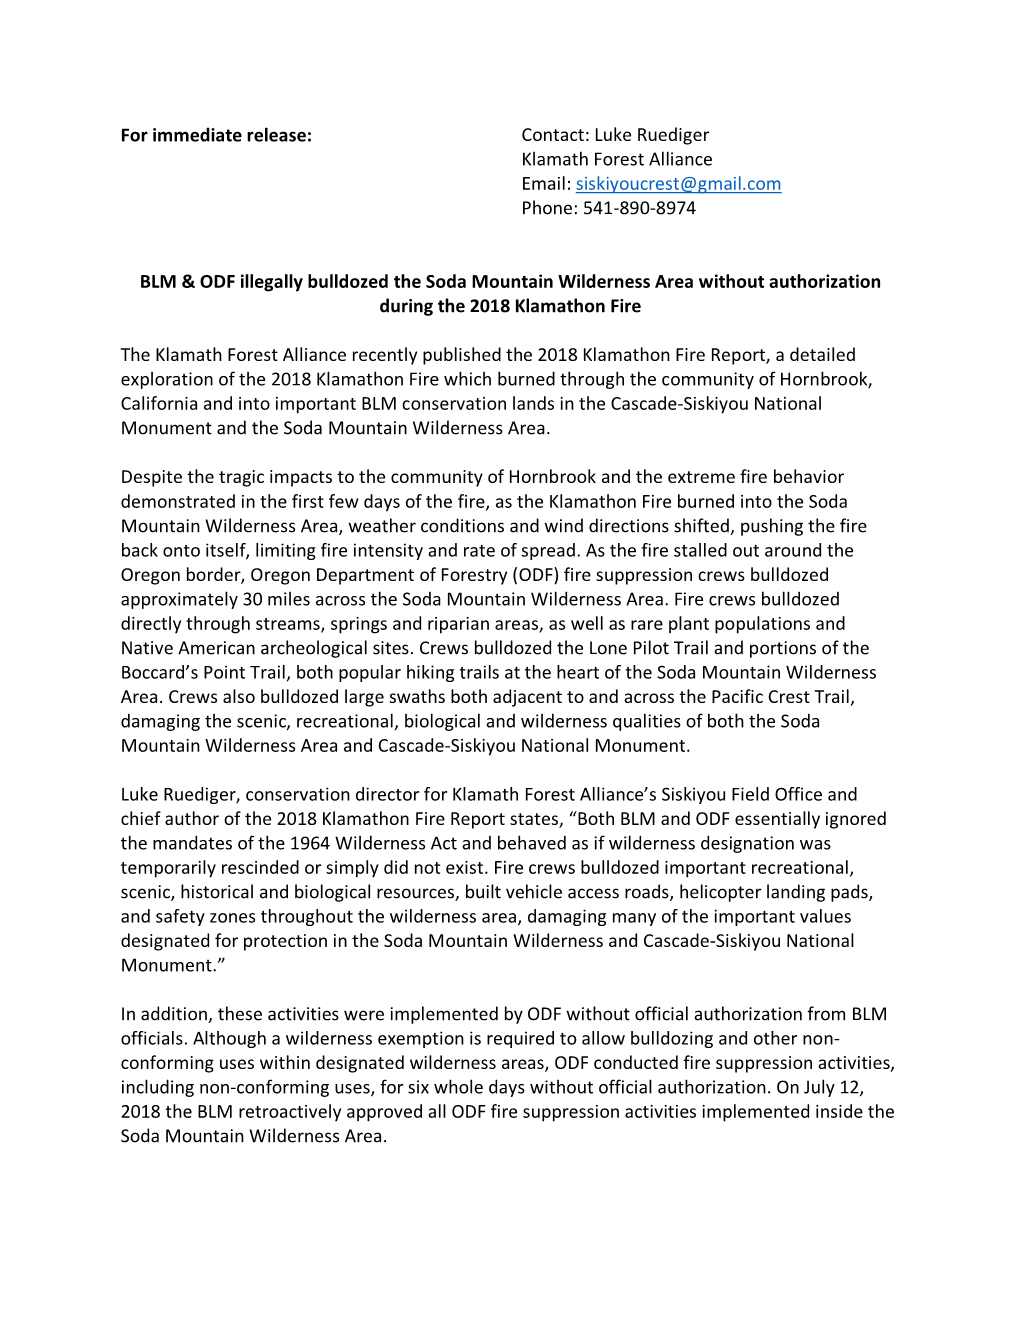 For Immediate Release: BLM & ODF Illegally Bulldozed the Soda